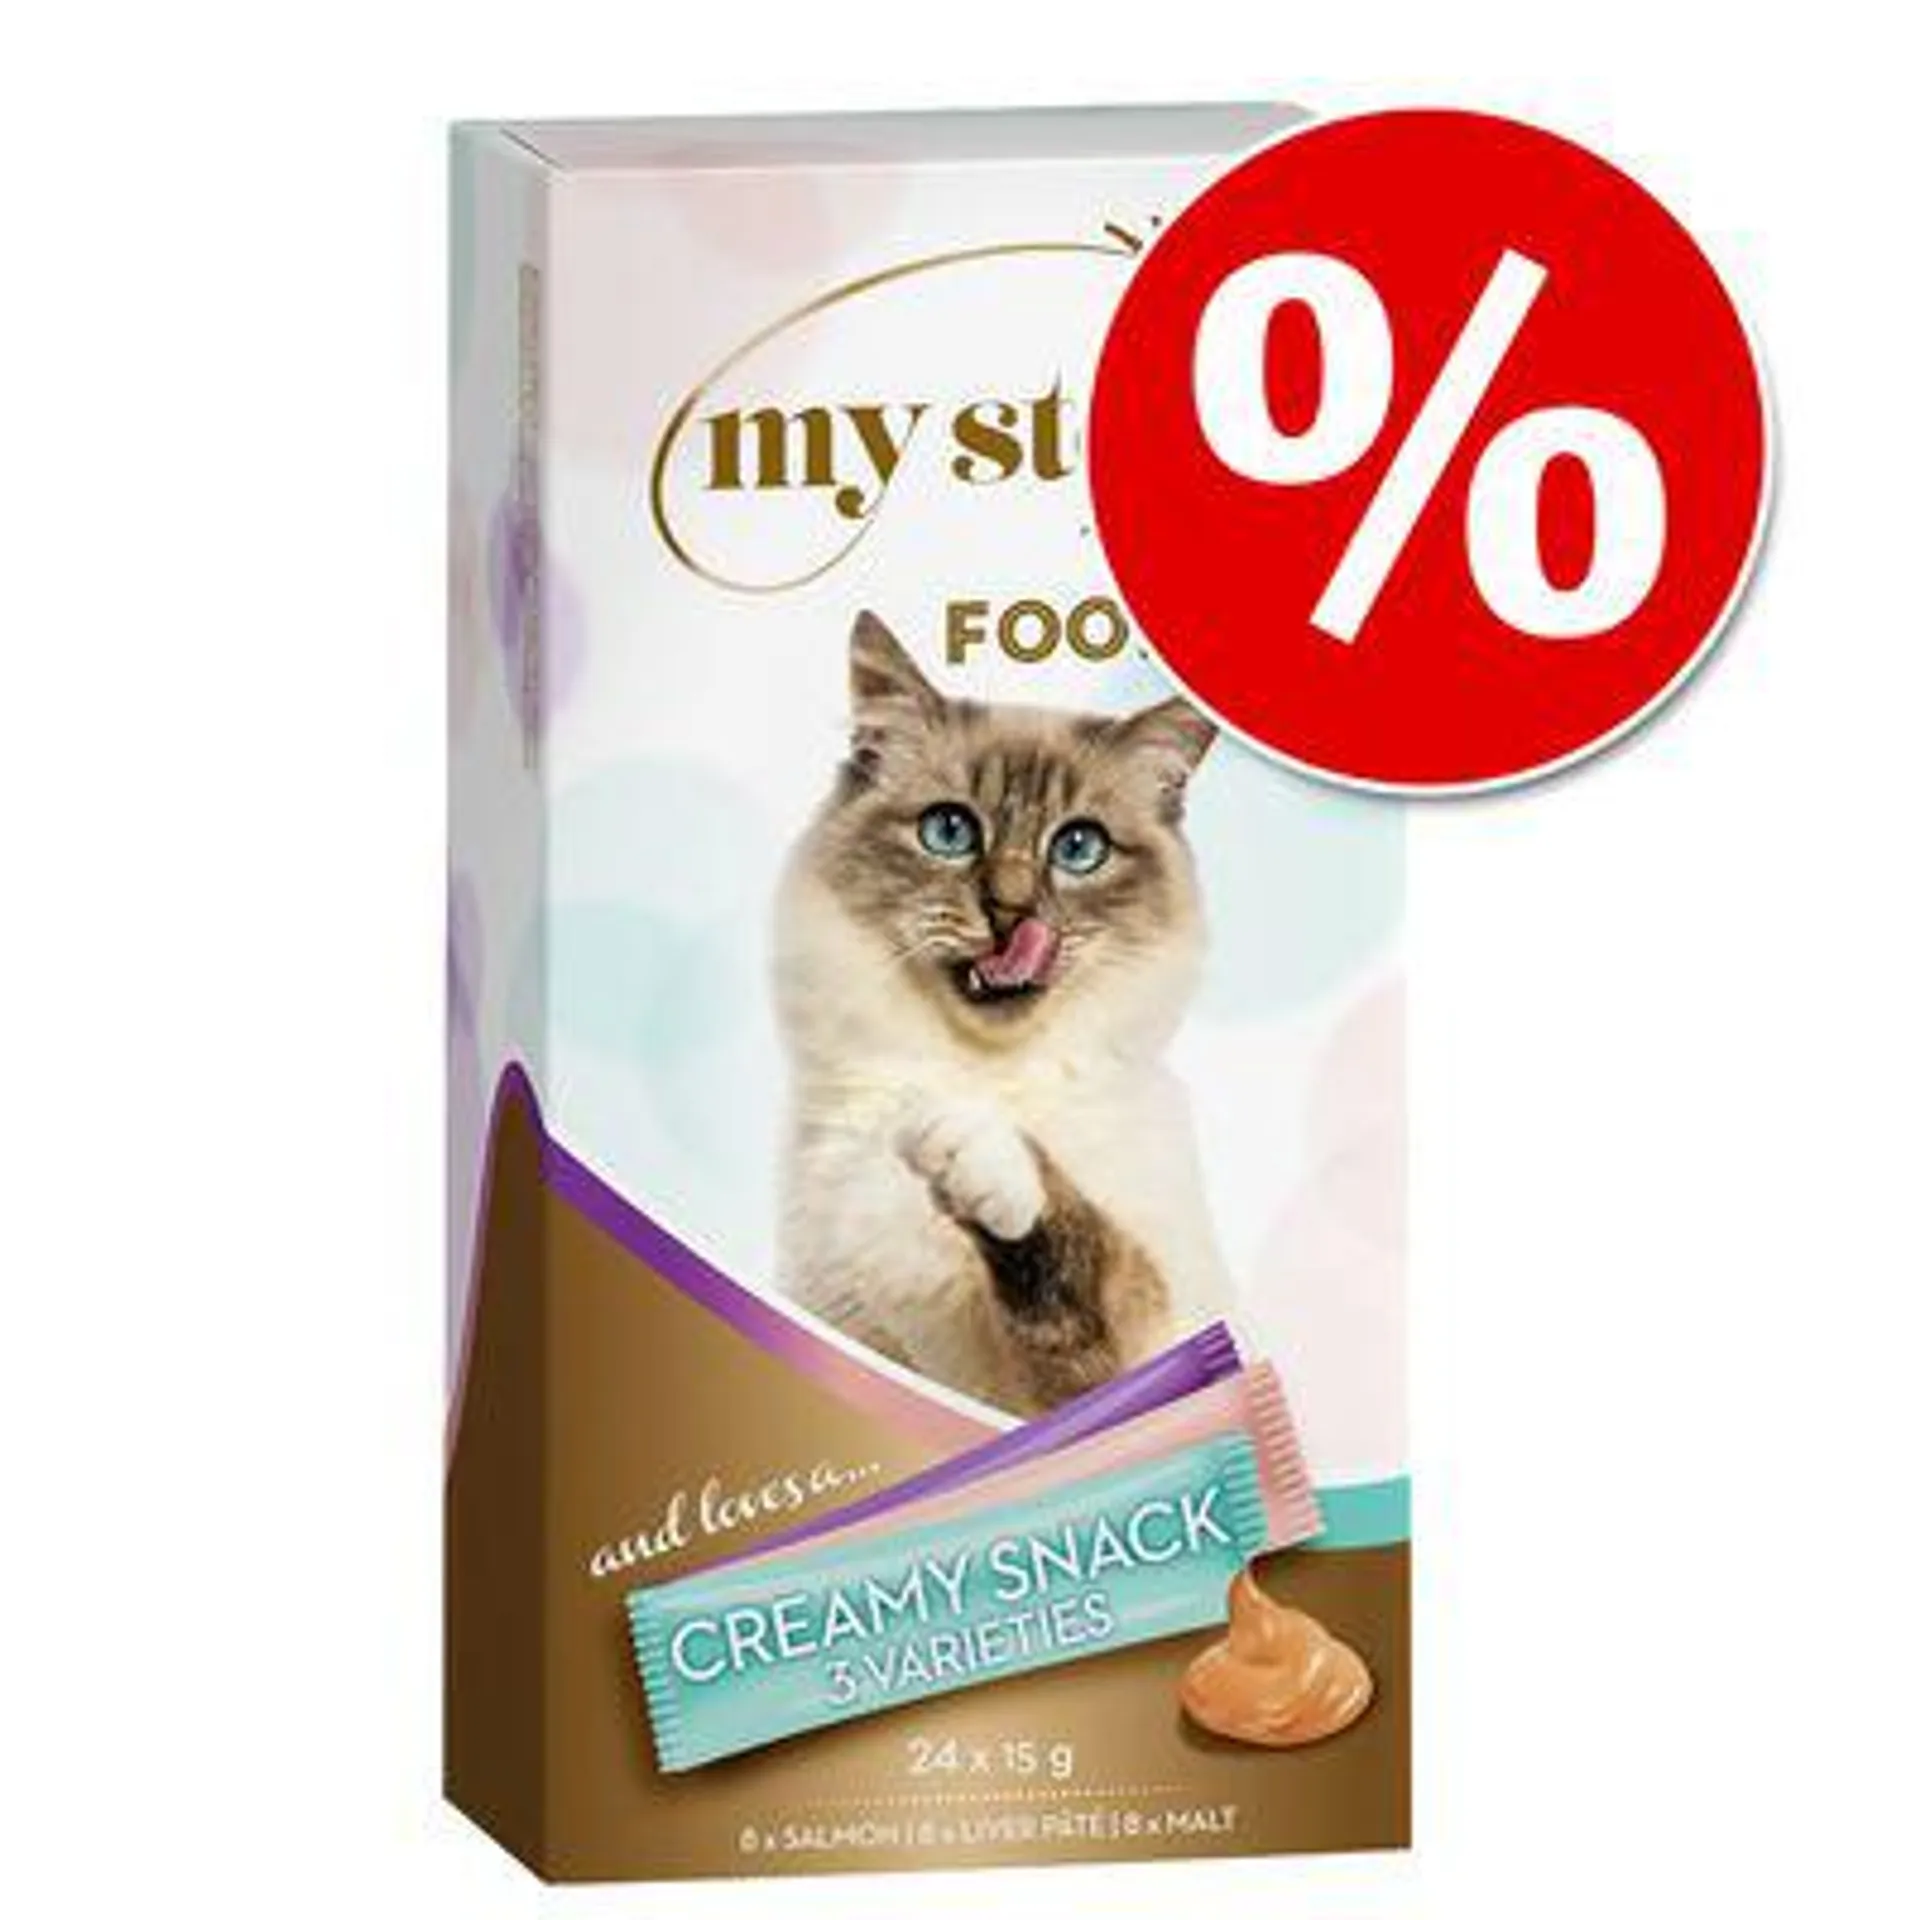 My Star Creamy Snack para gatos 24 x 15 g - Pack económico